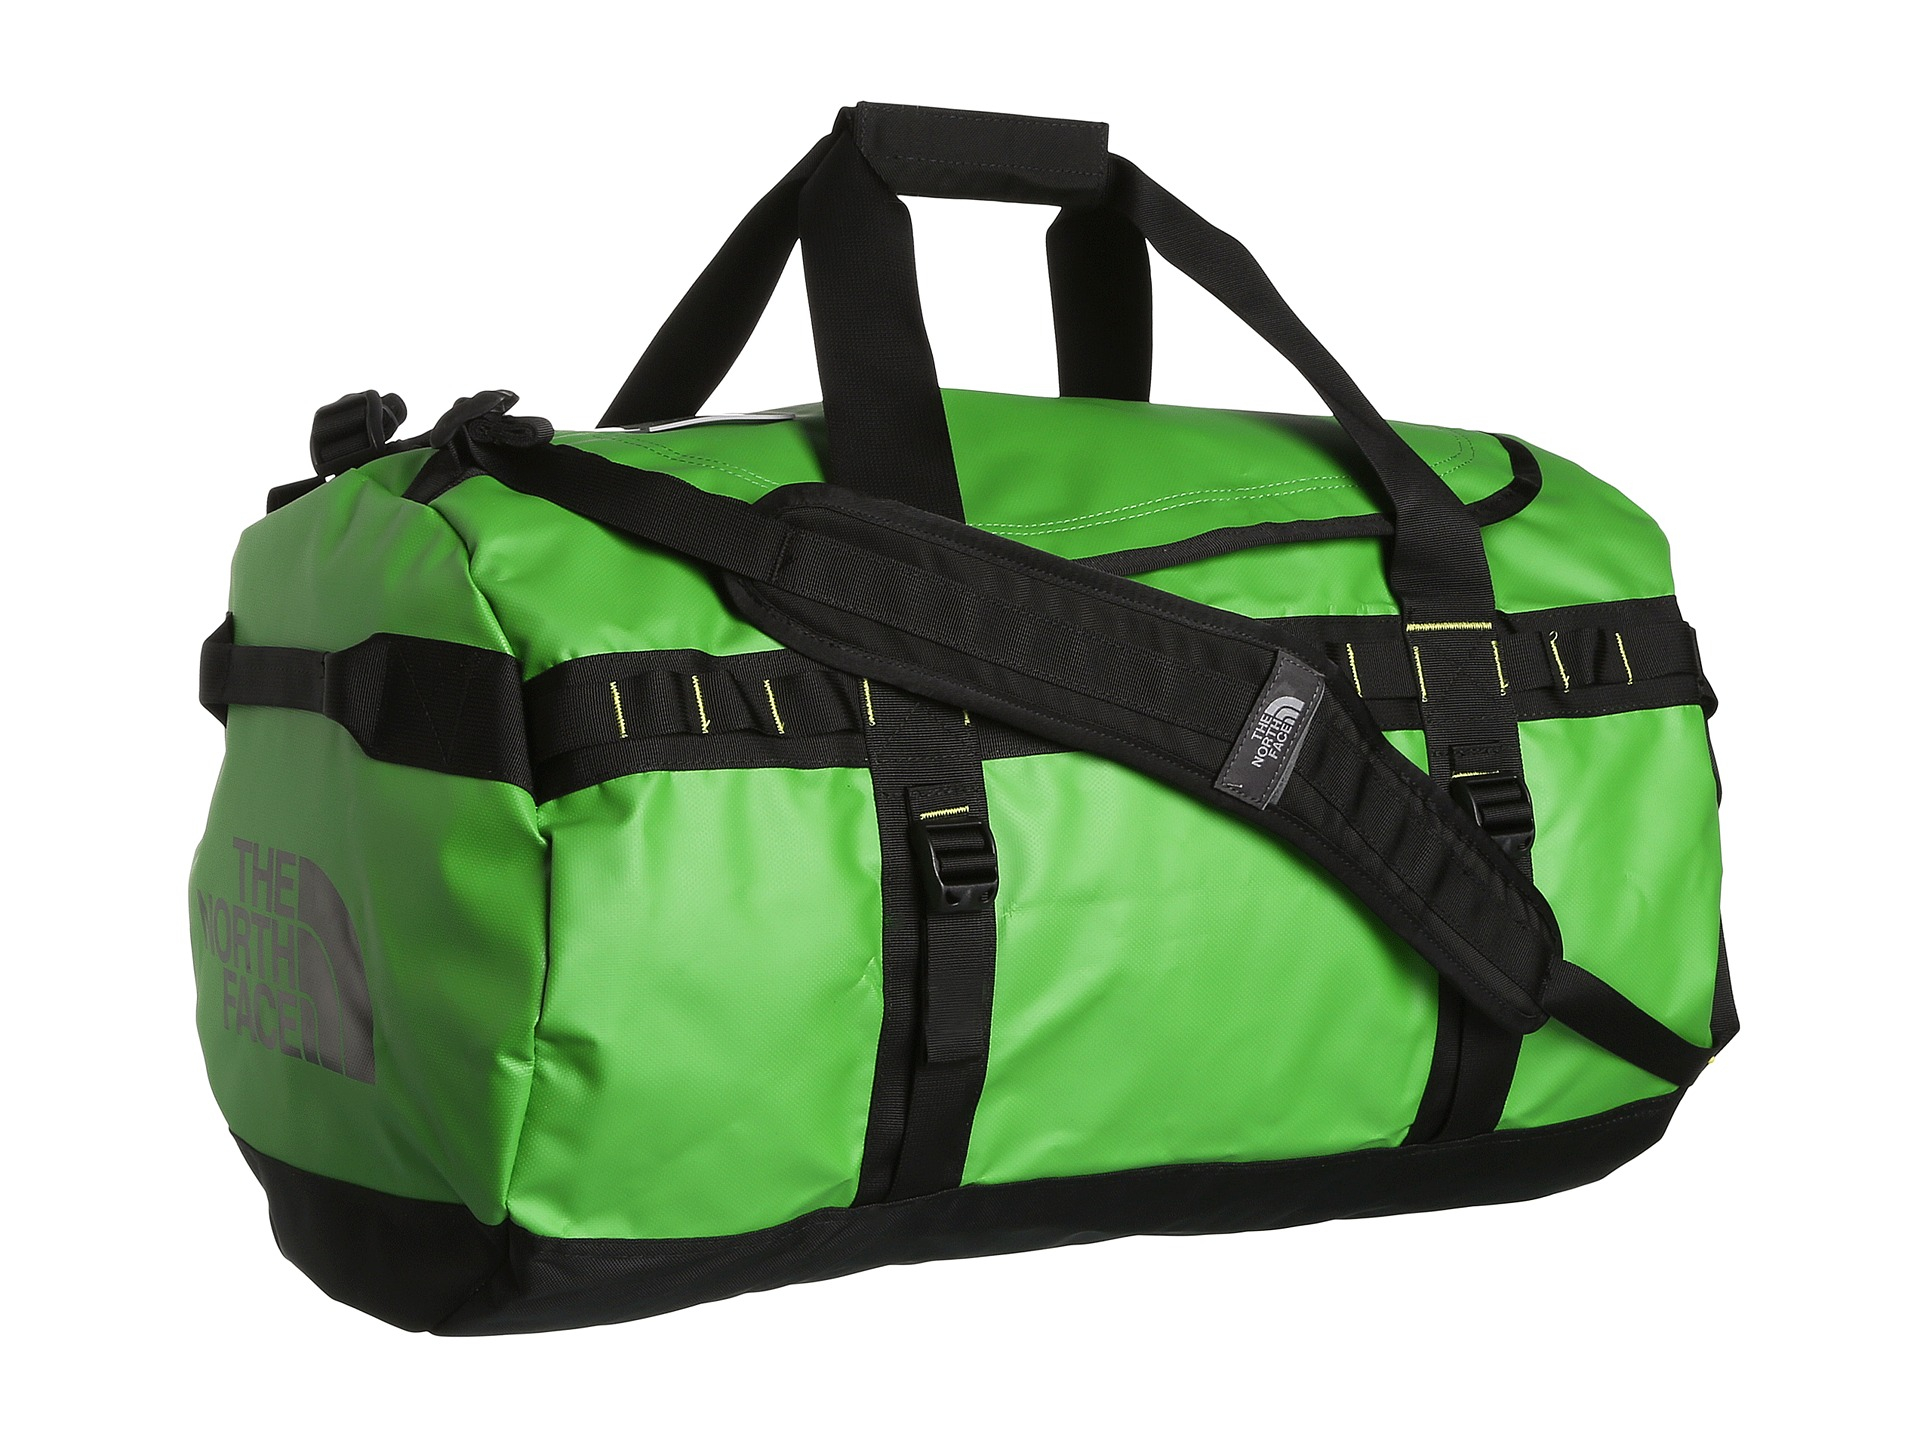 north face green duffel bag